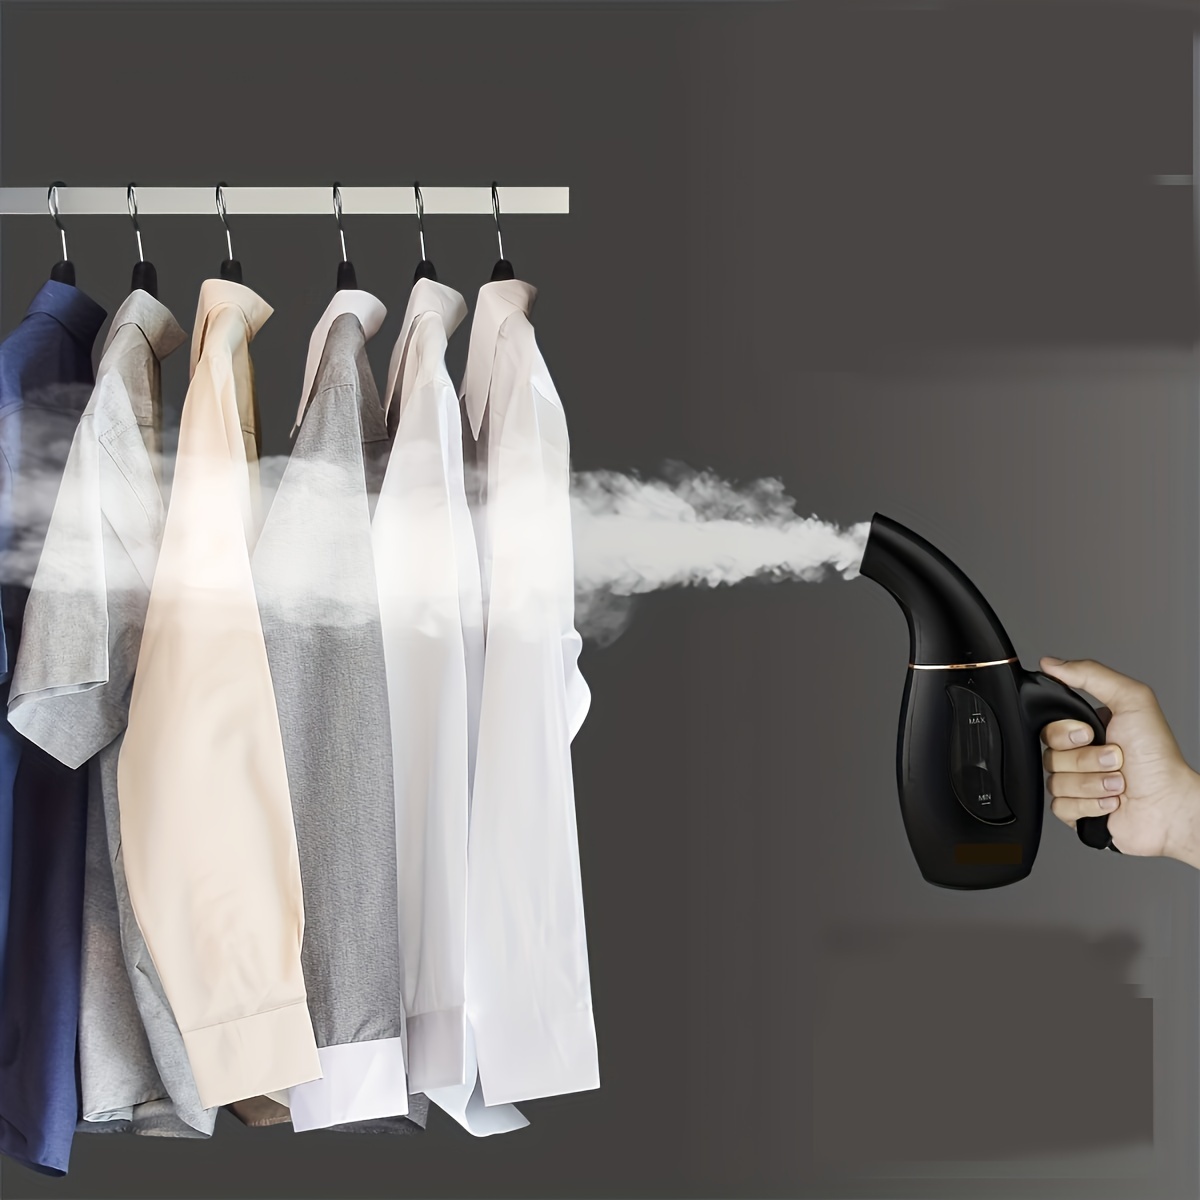 Handheld Steamer For Clothes Strong Power Garment Steamer - Temu